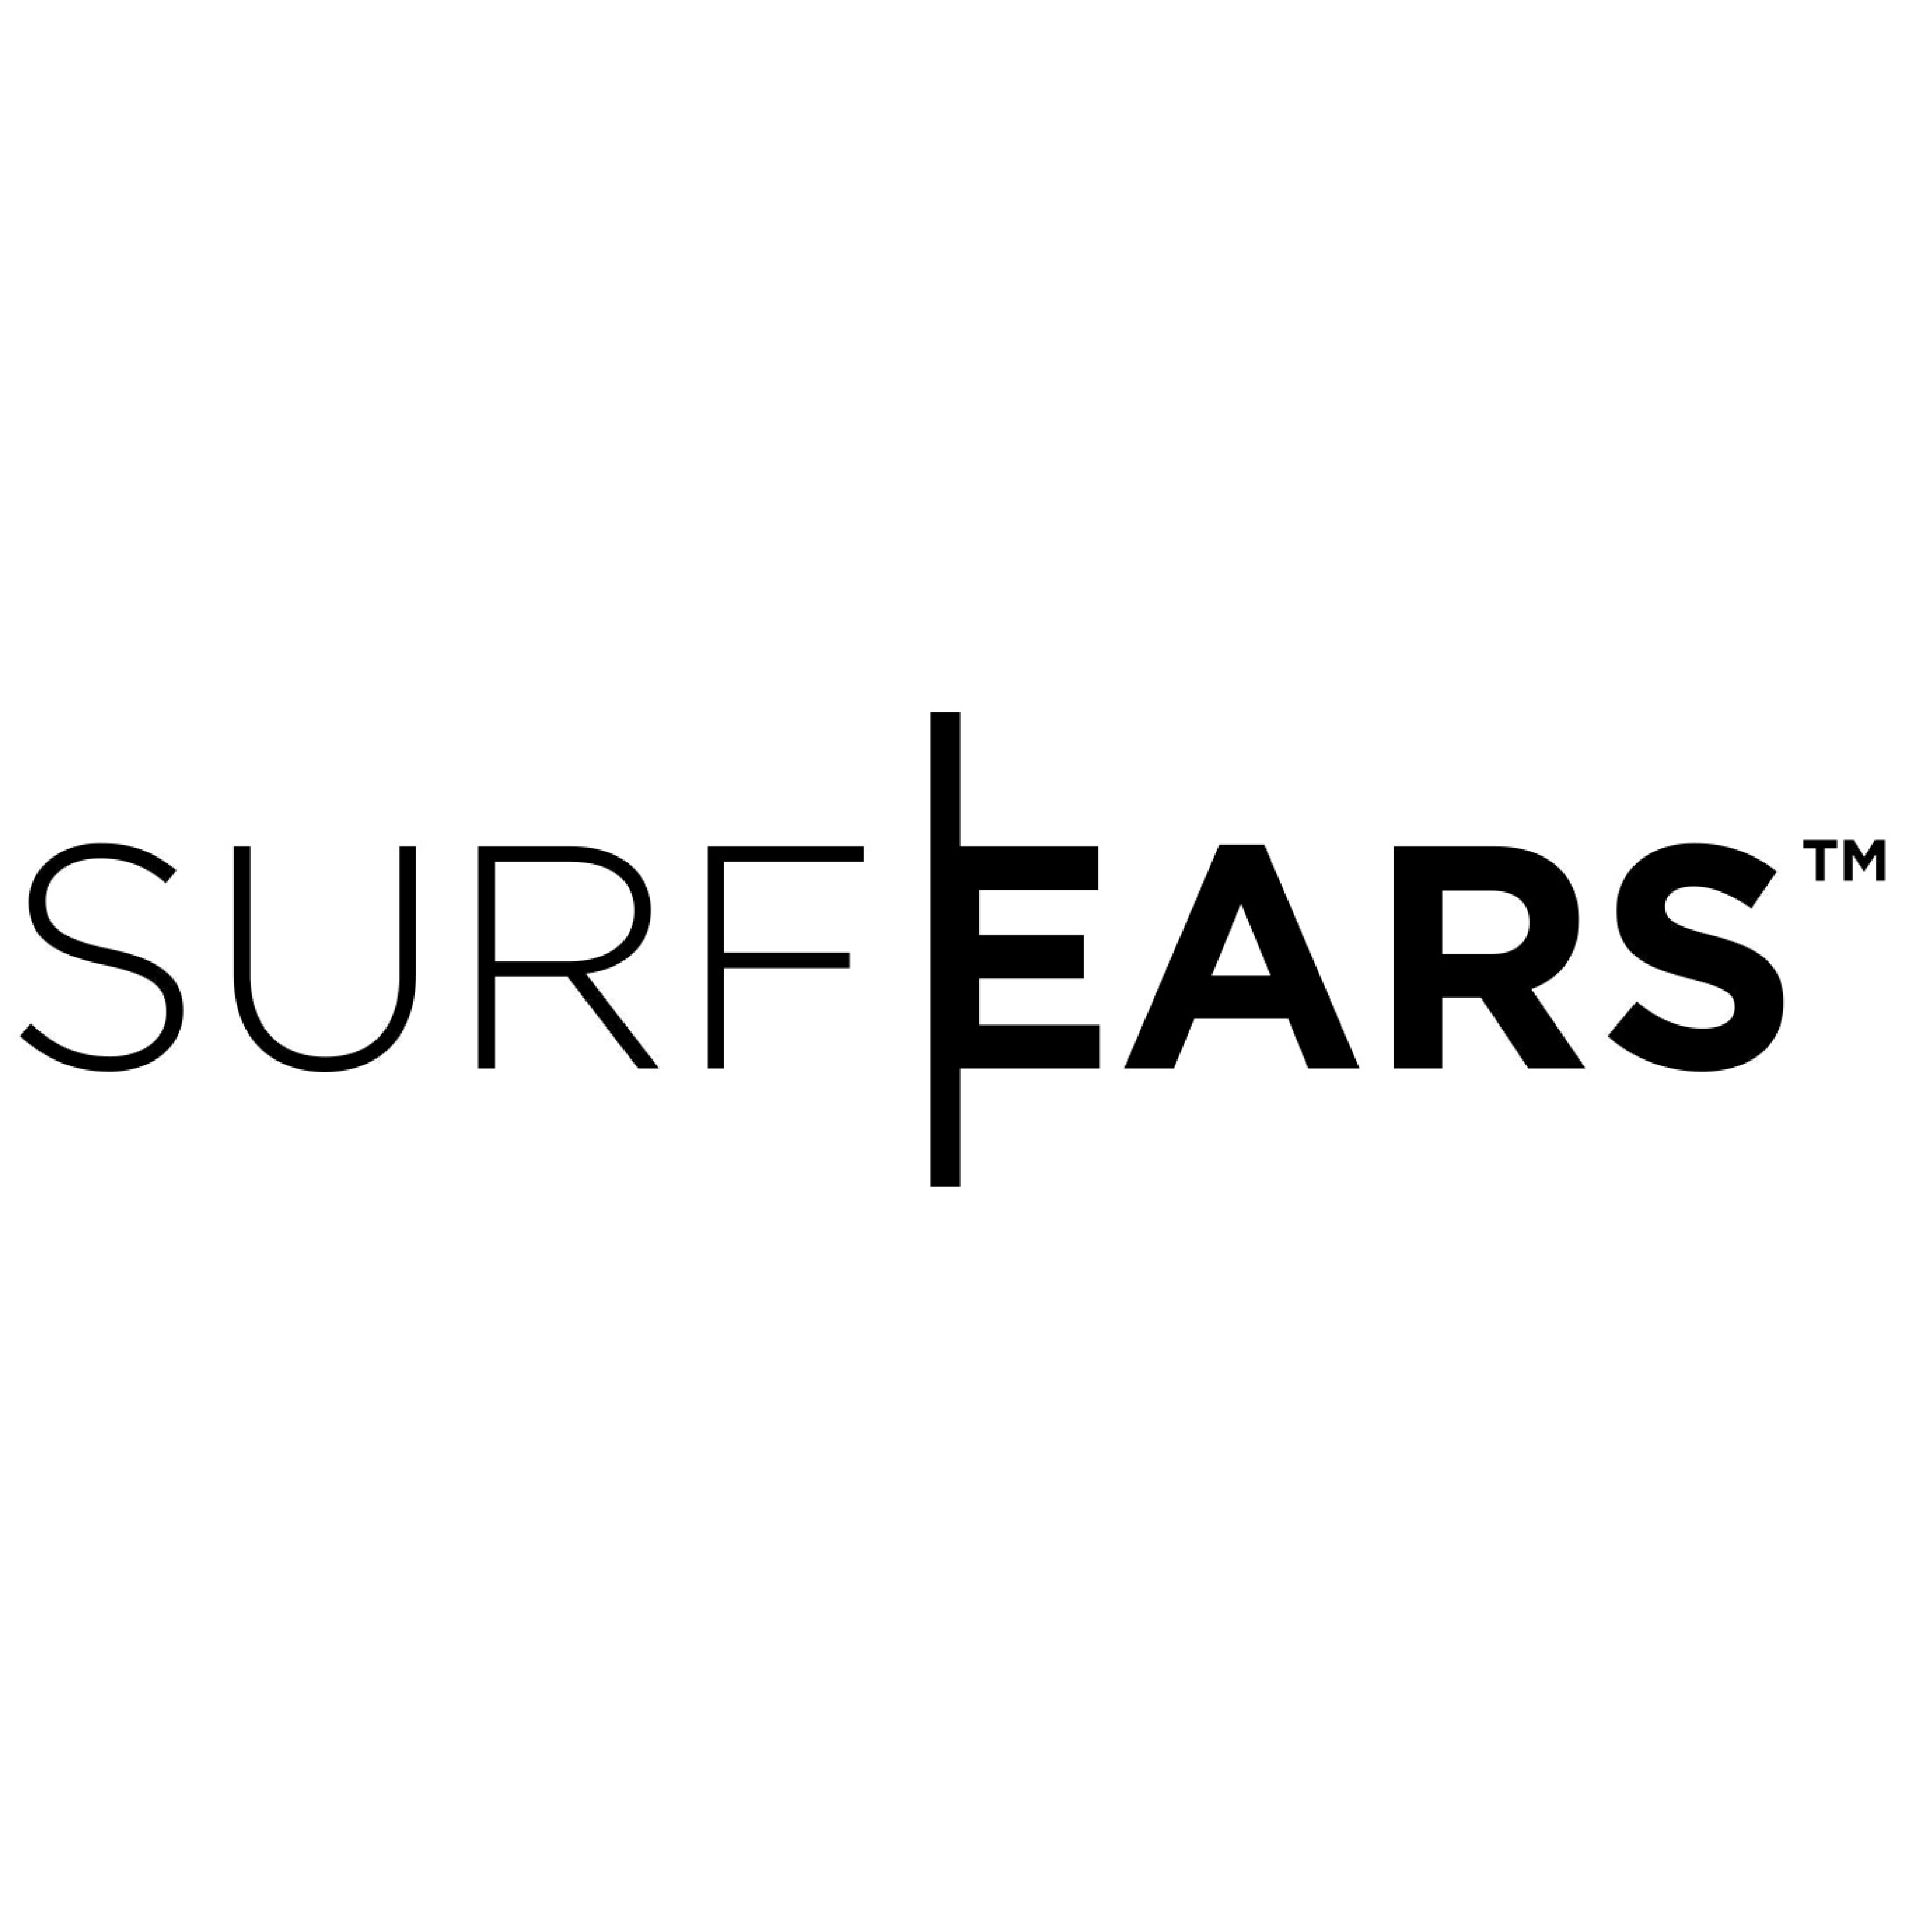 Surf Ears 1-01